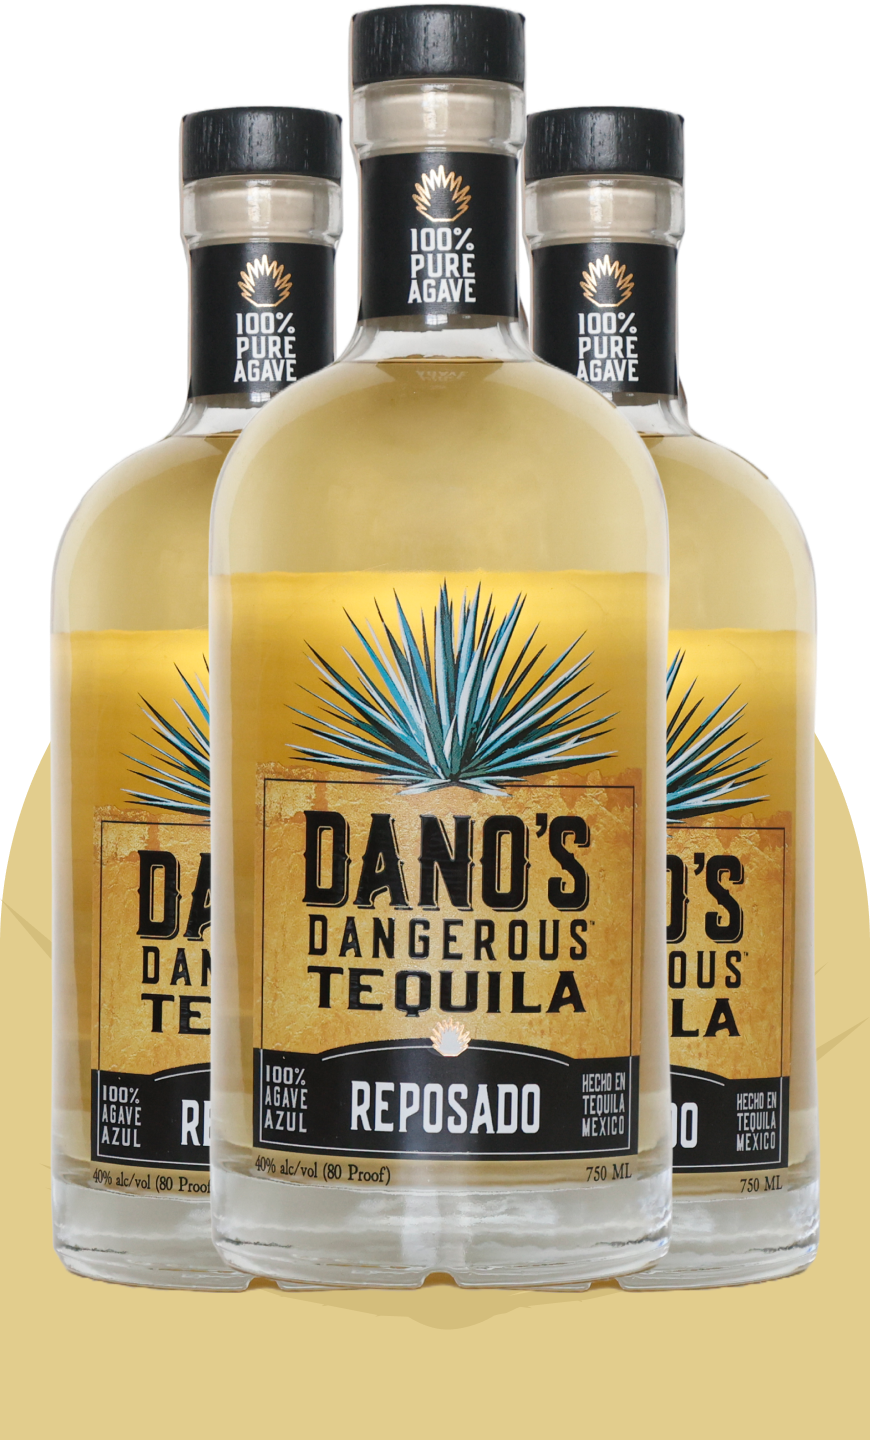 Dano's Party 6 Pack - REPOSADO